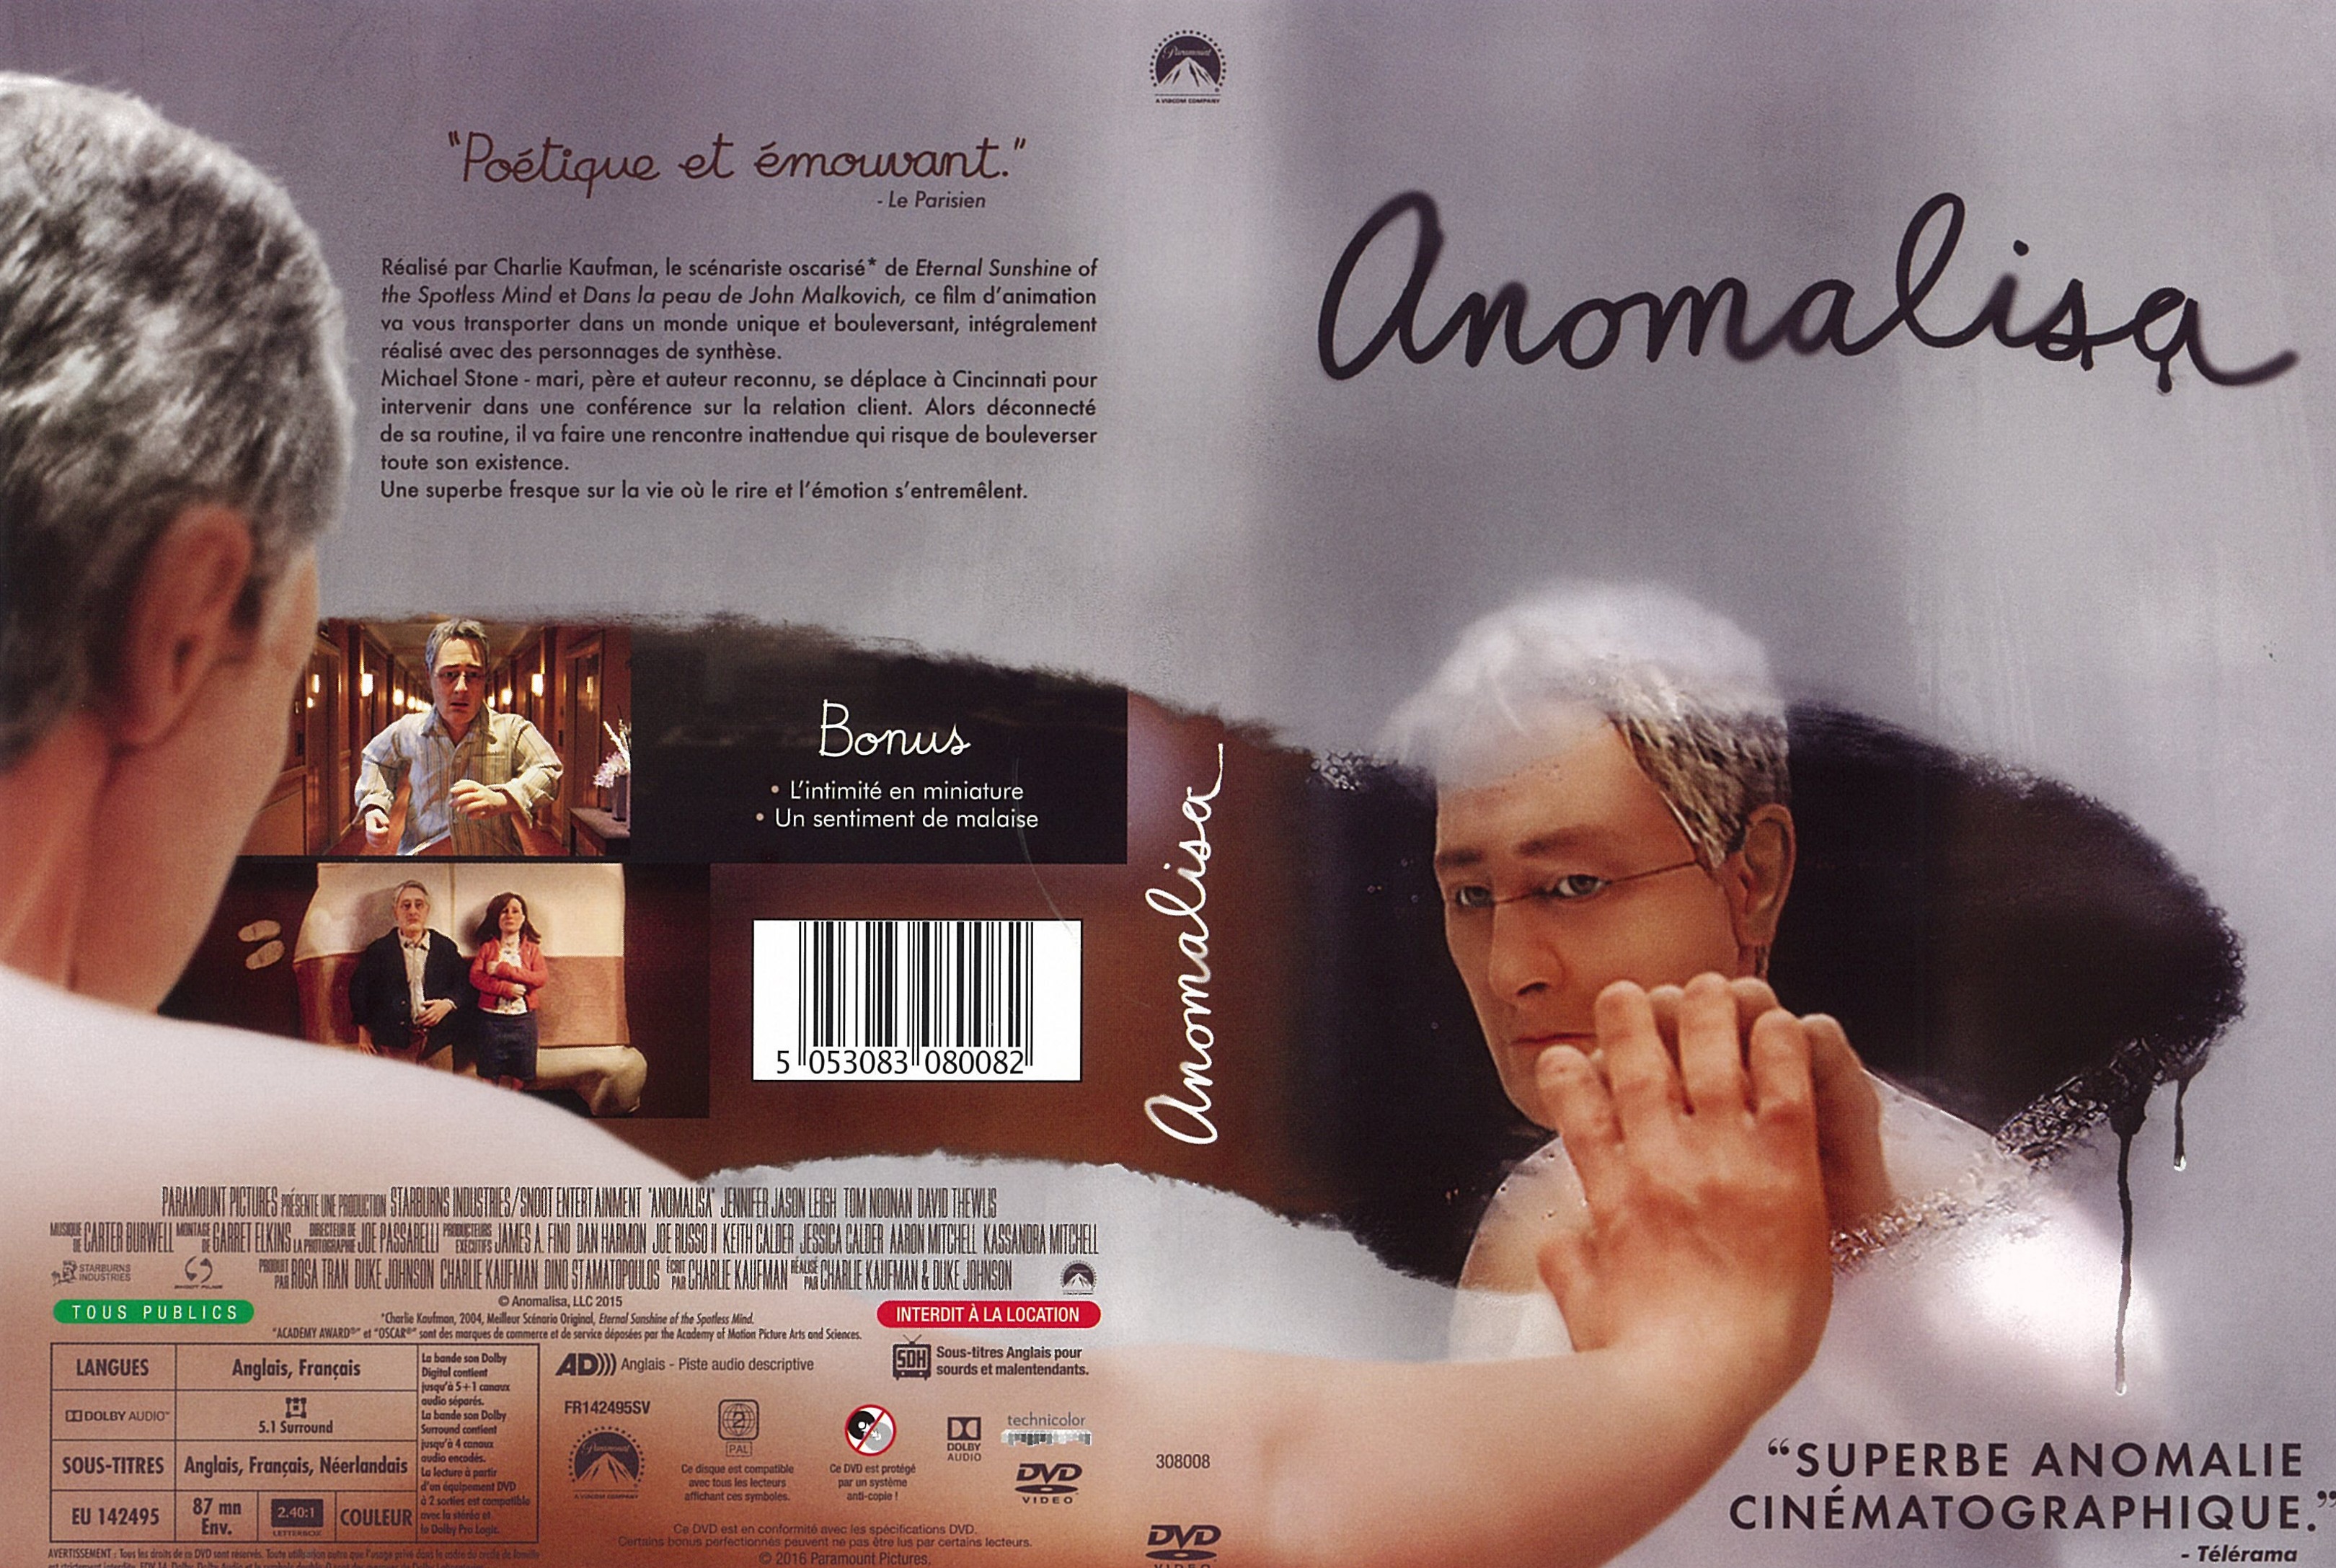 Jaquette DVD Anomalisa